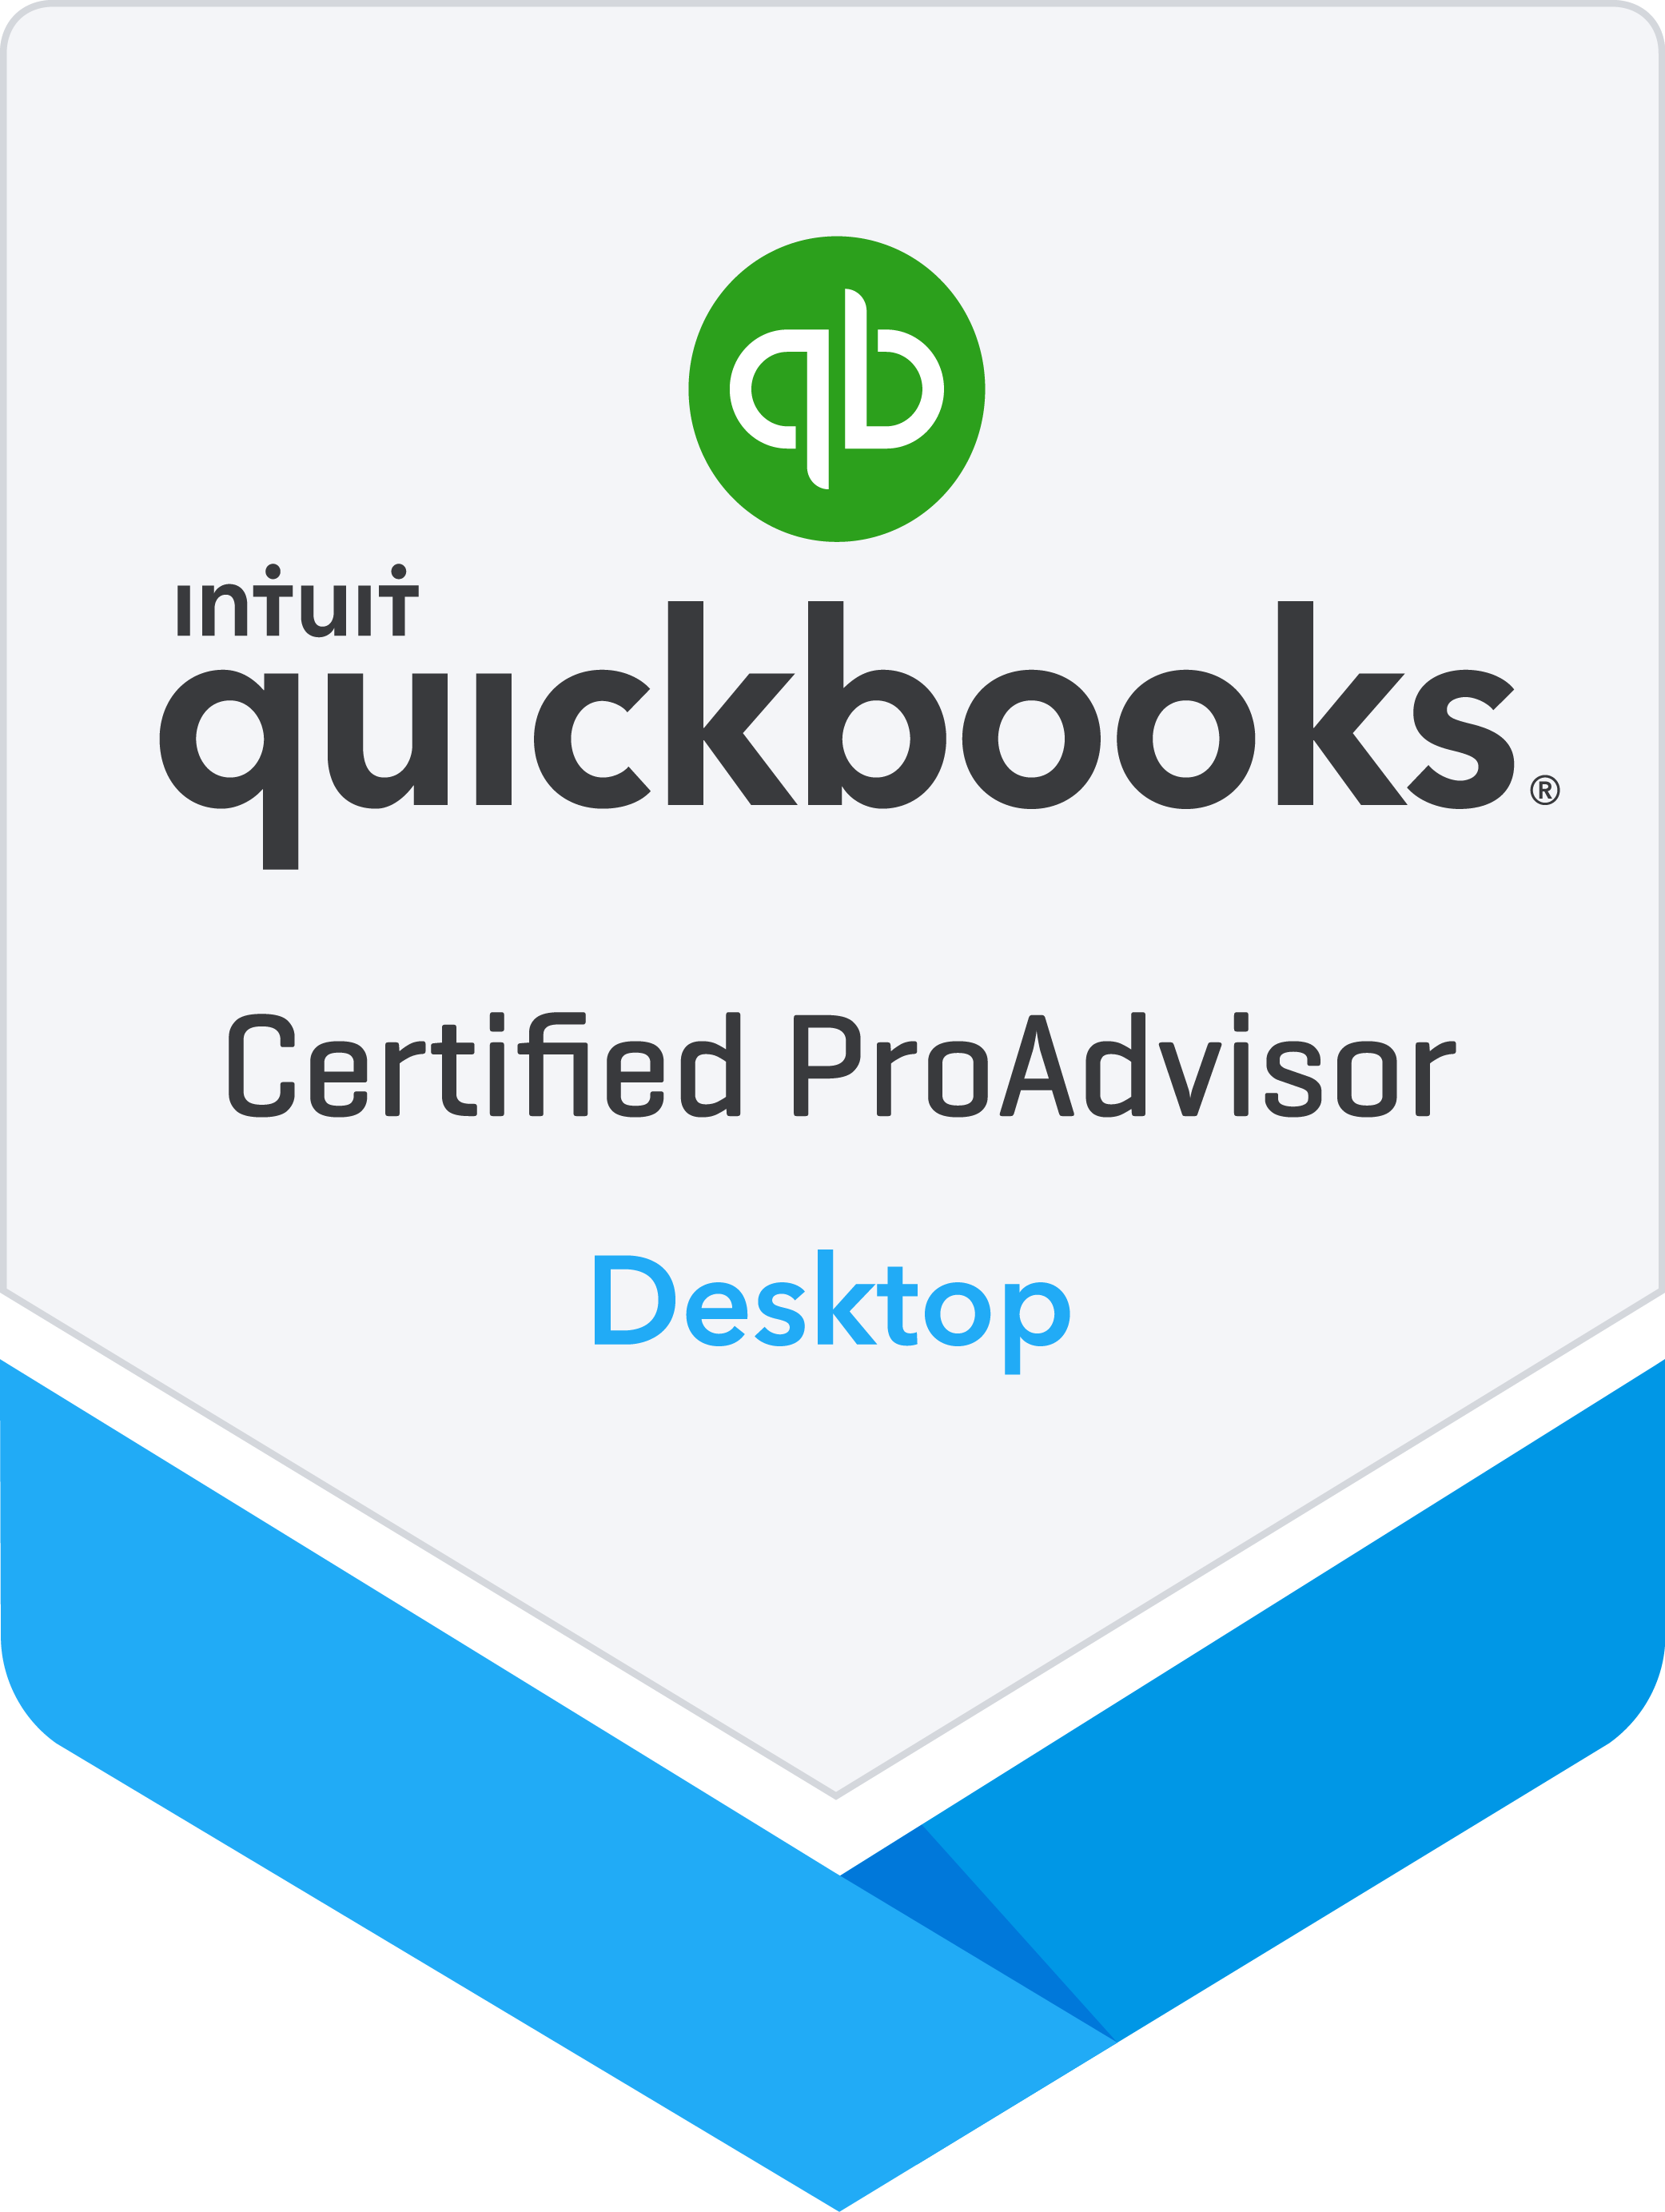 Quick Books Desktop Certified ProAdvisor